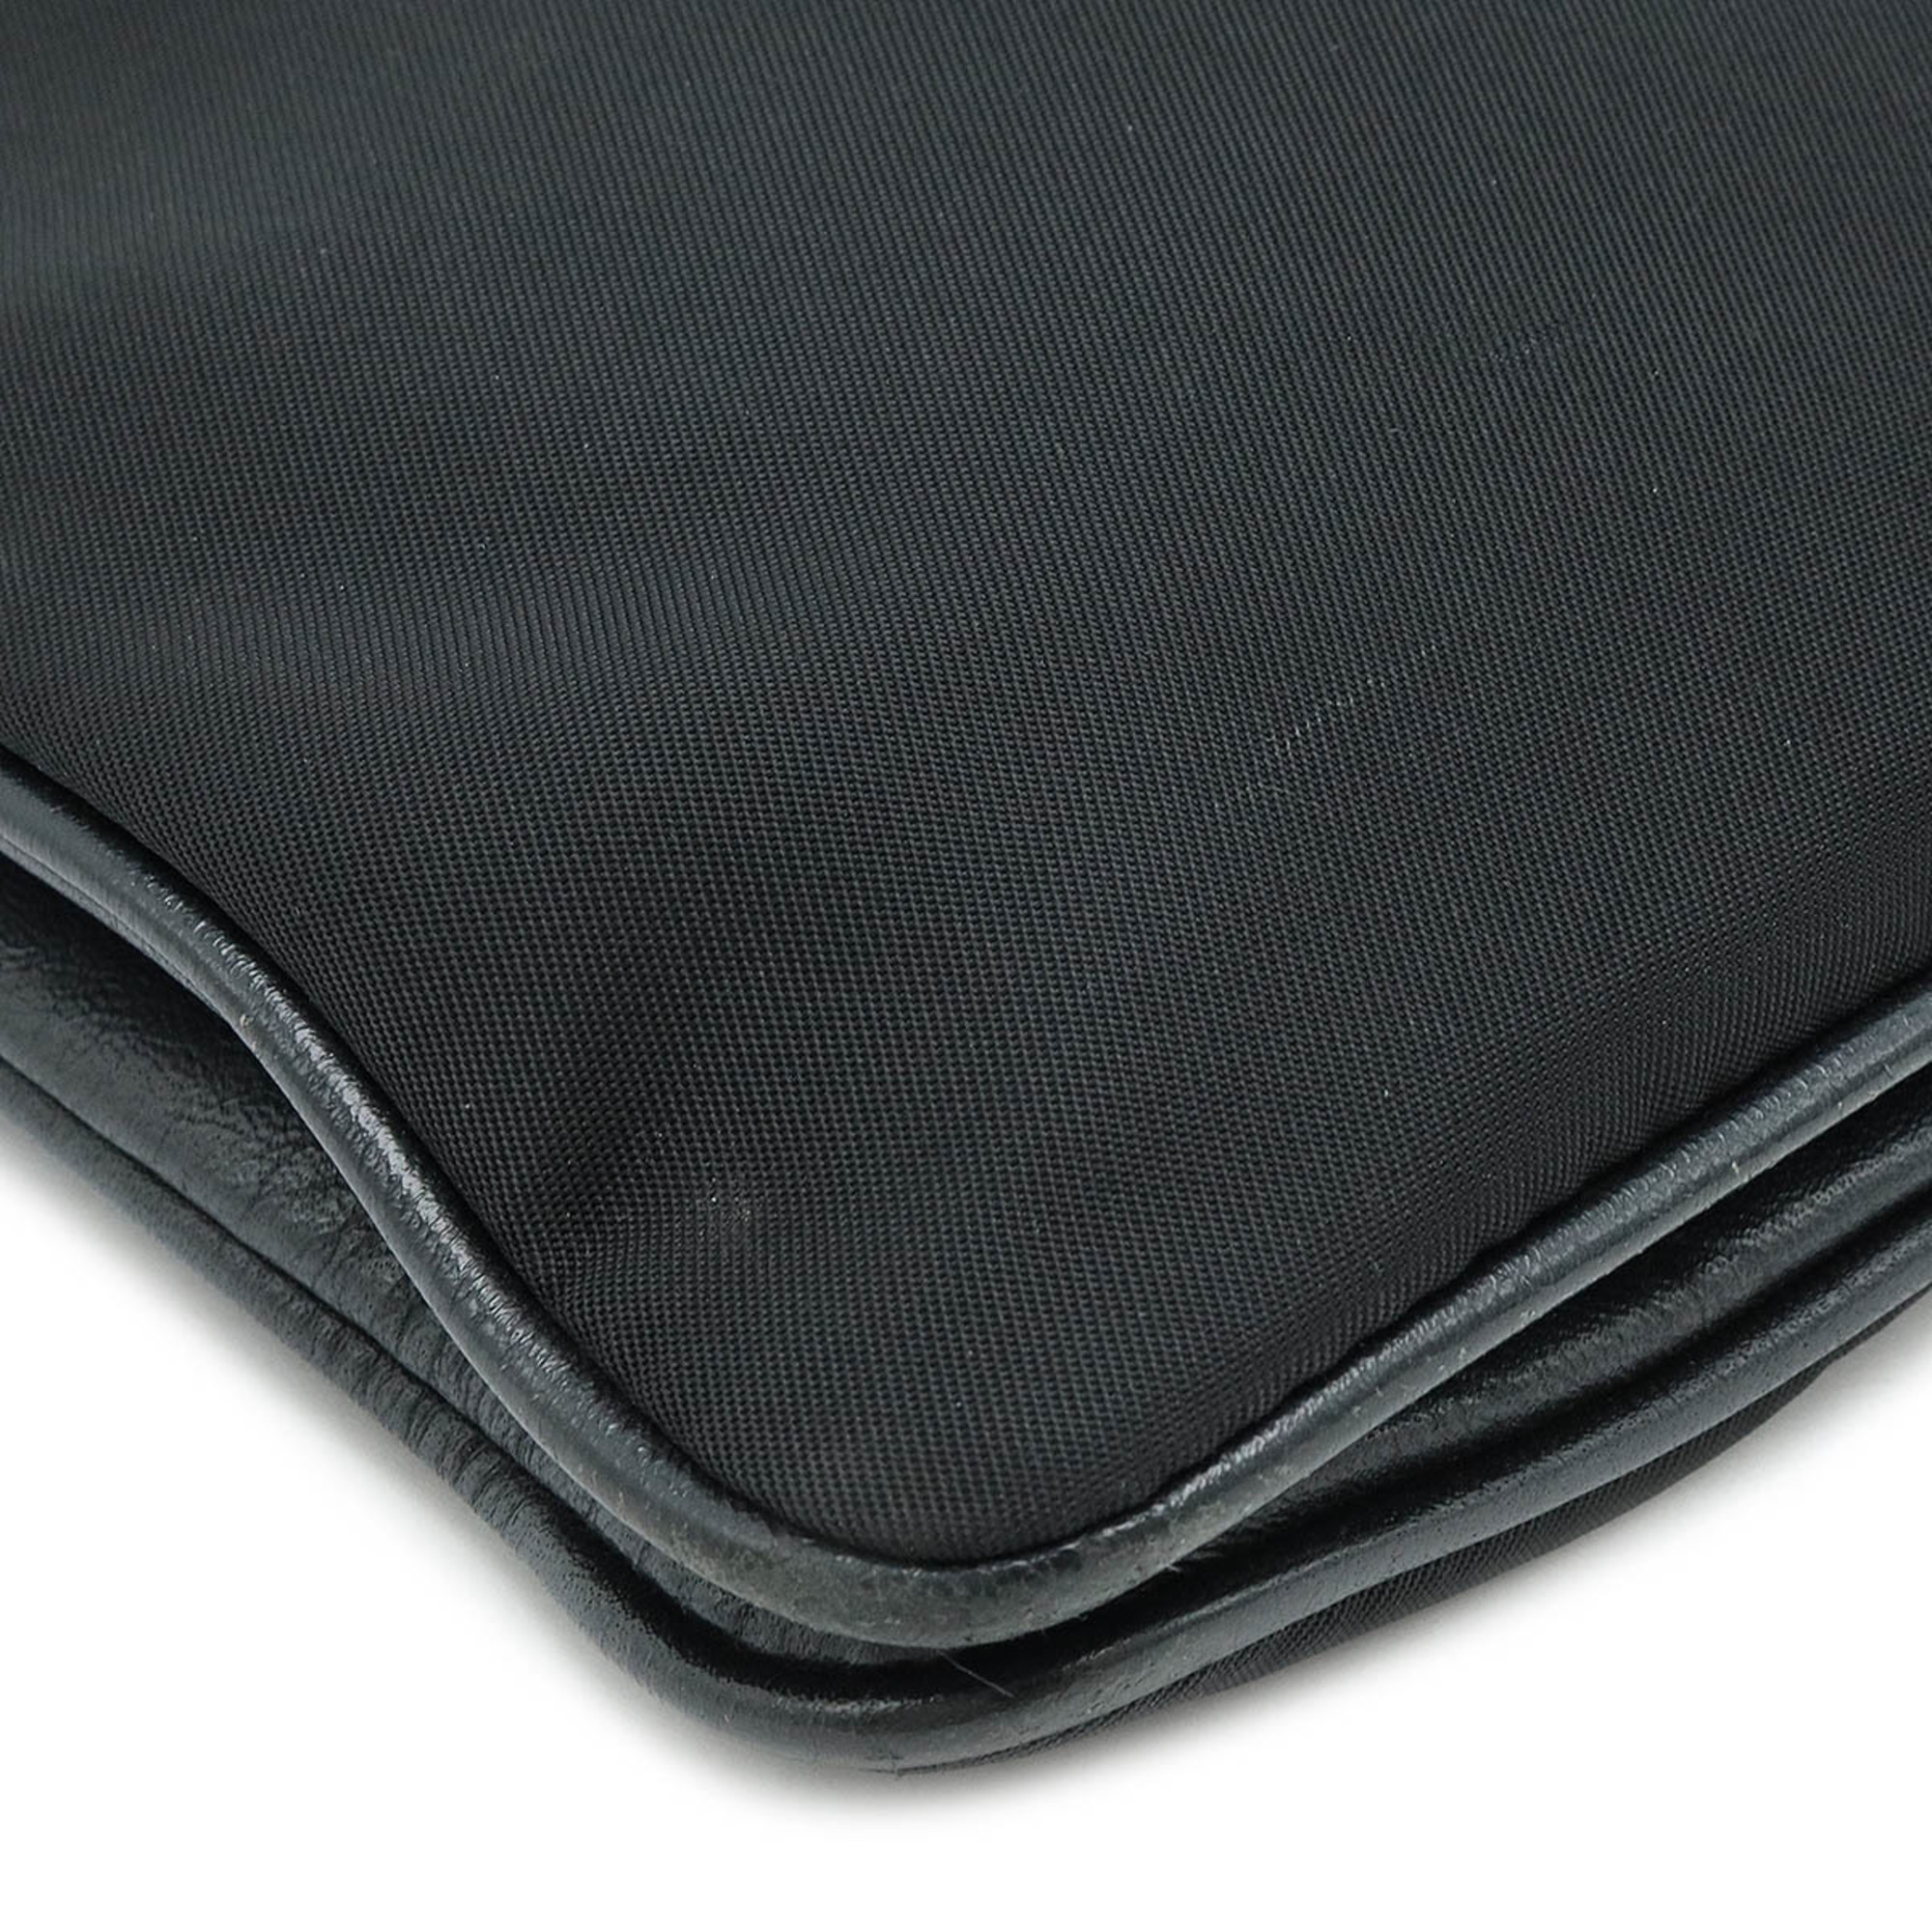 PRADA Prada Shoulder Bag Pochette Clutch Nylon Leather NERO Black Purchased at a domestic outlet 1BH046